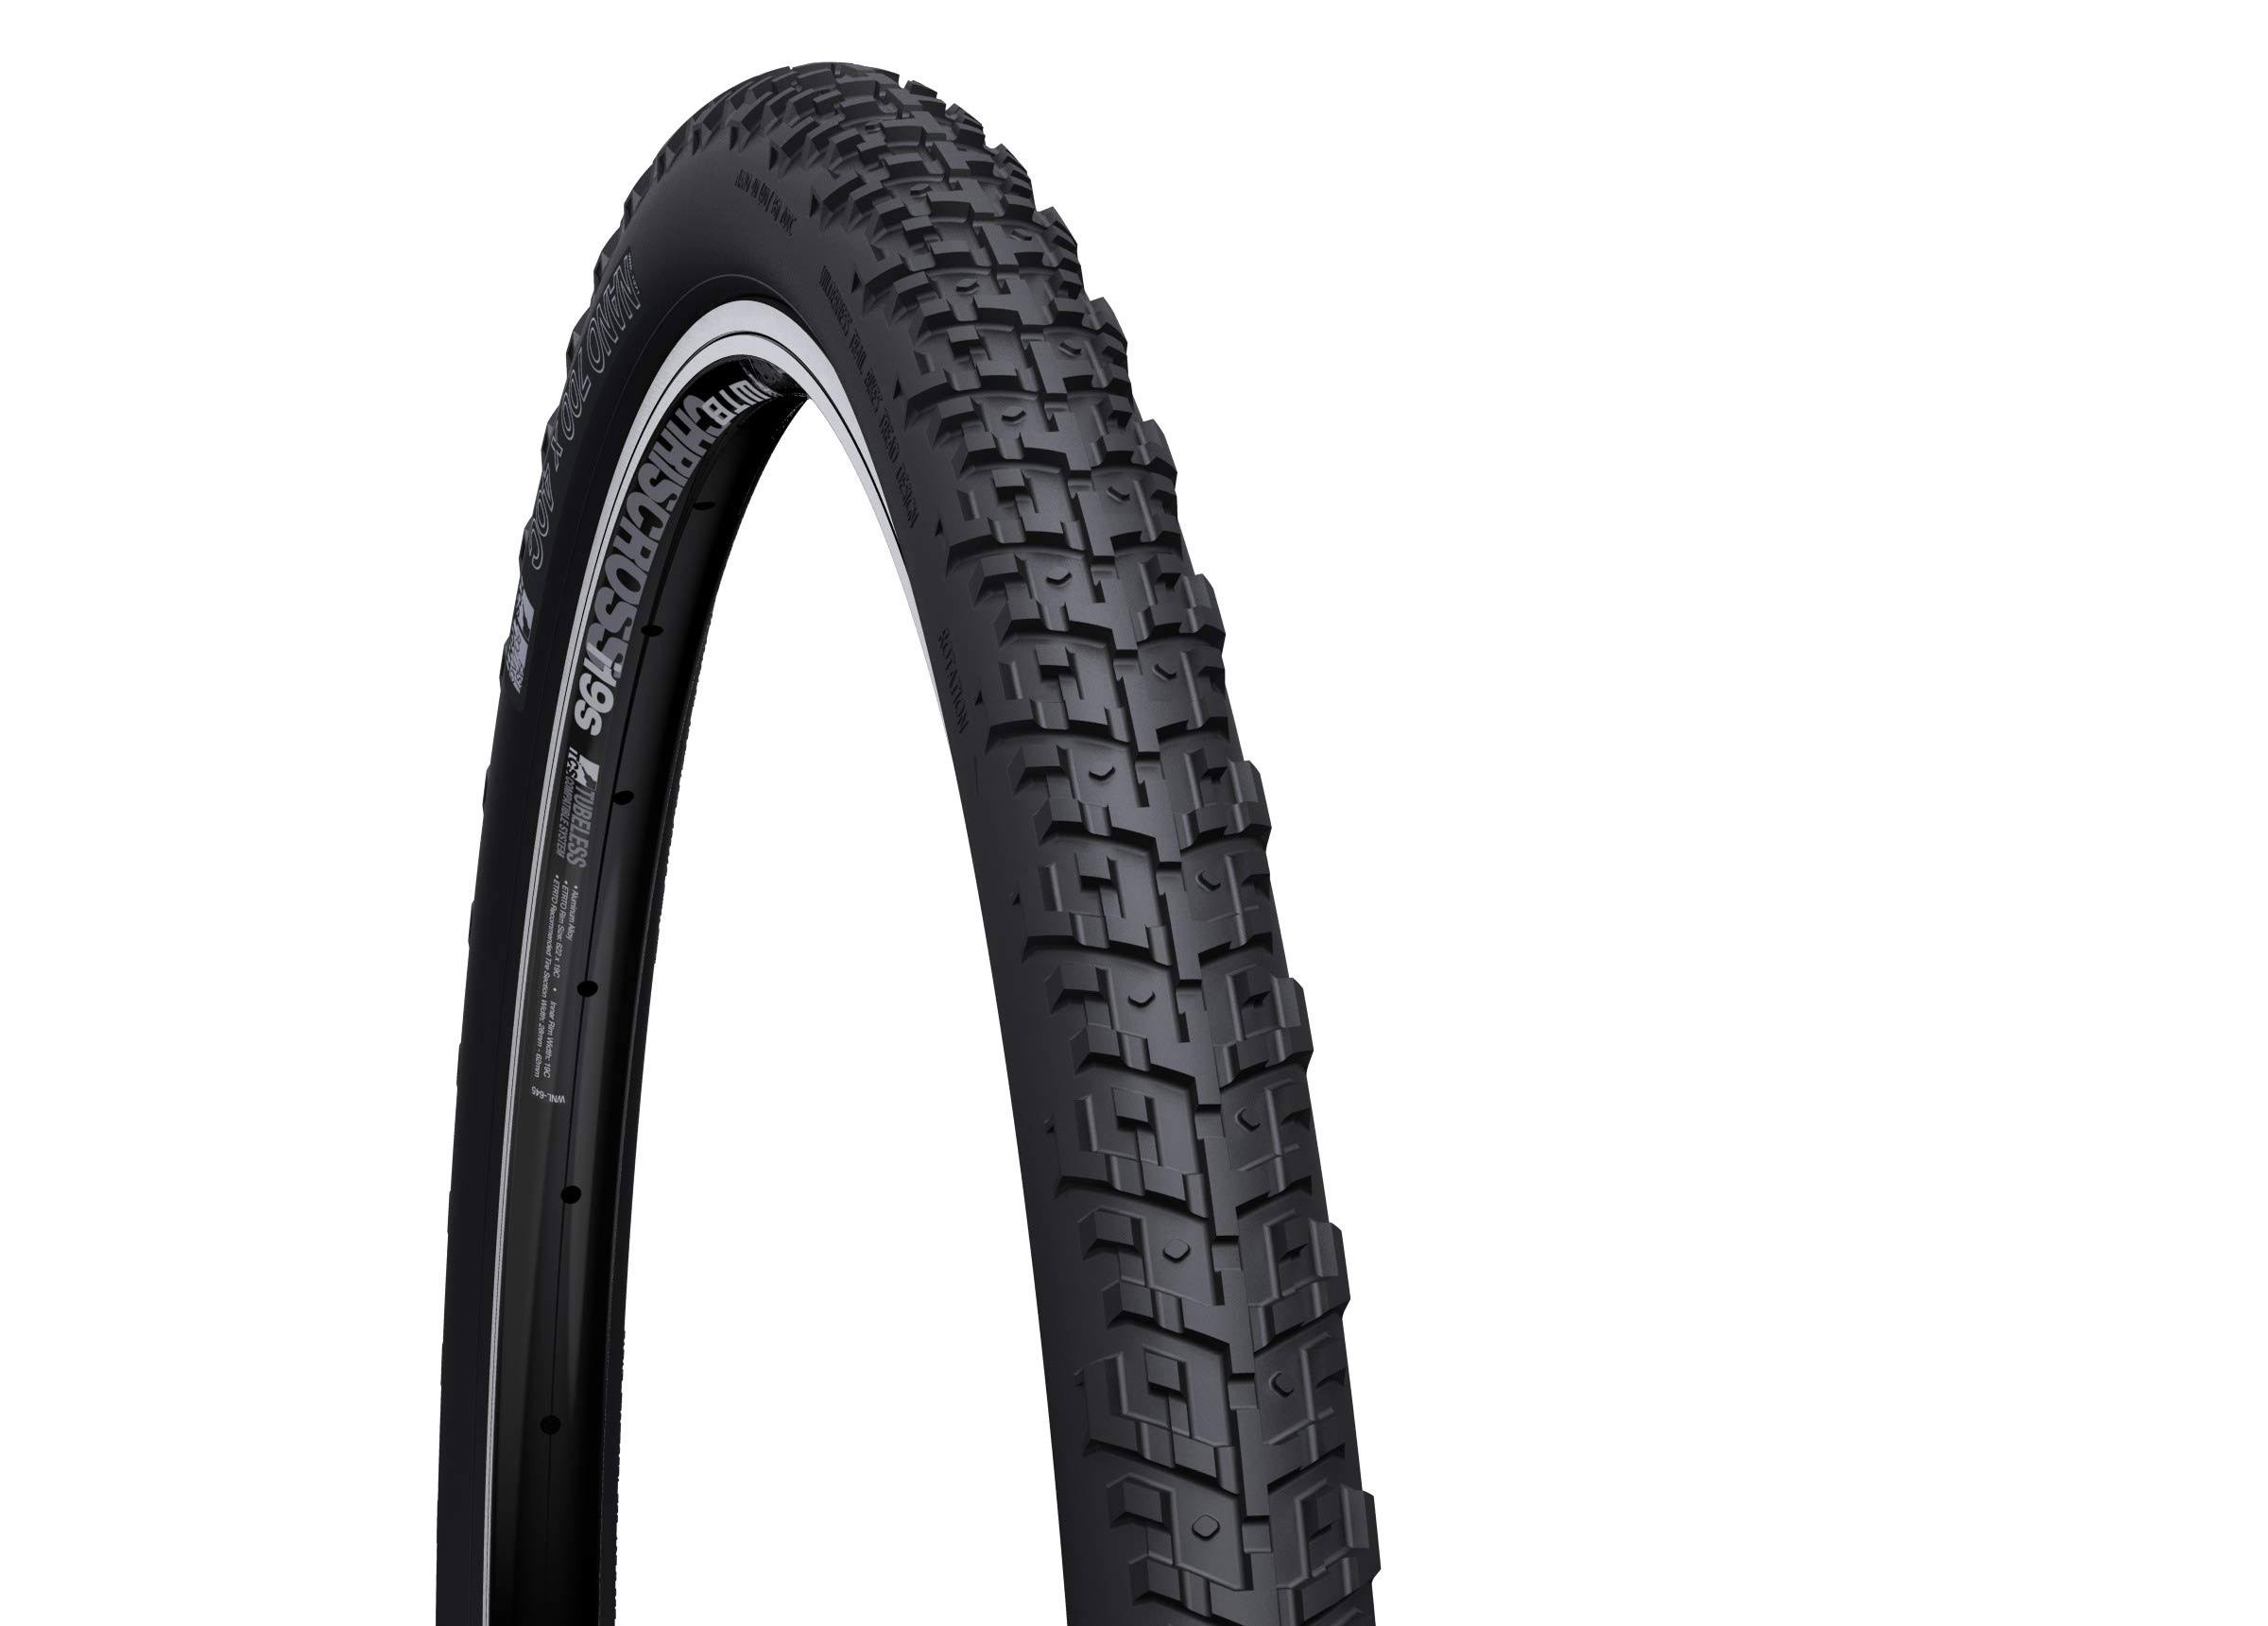 WTB Nano TCS Light and Fast Rolling Folding Cross Tire - 700 x 40c, Black